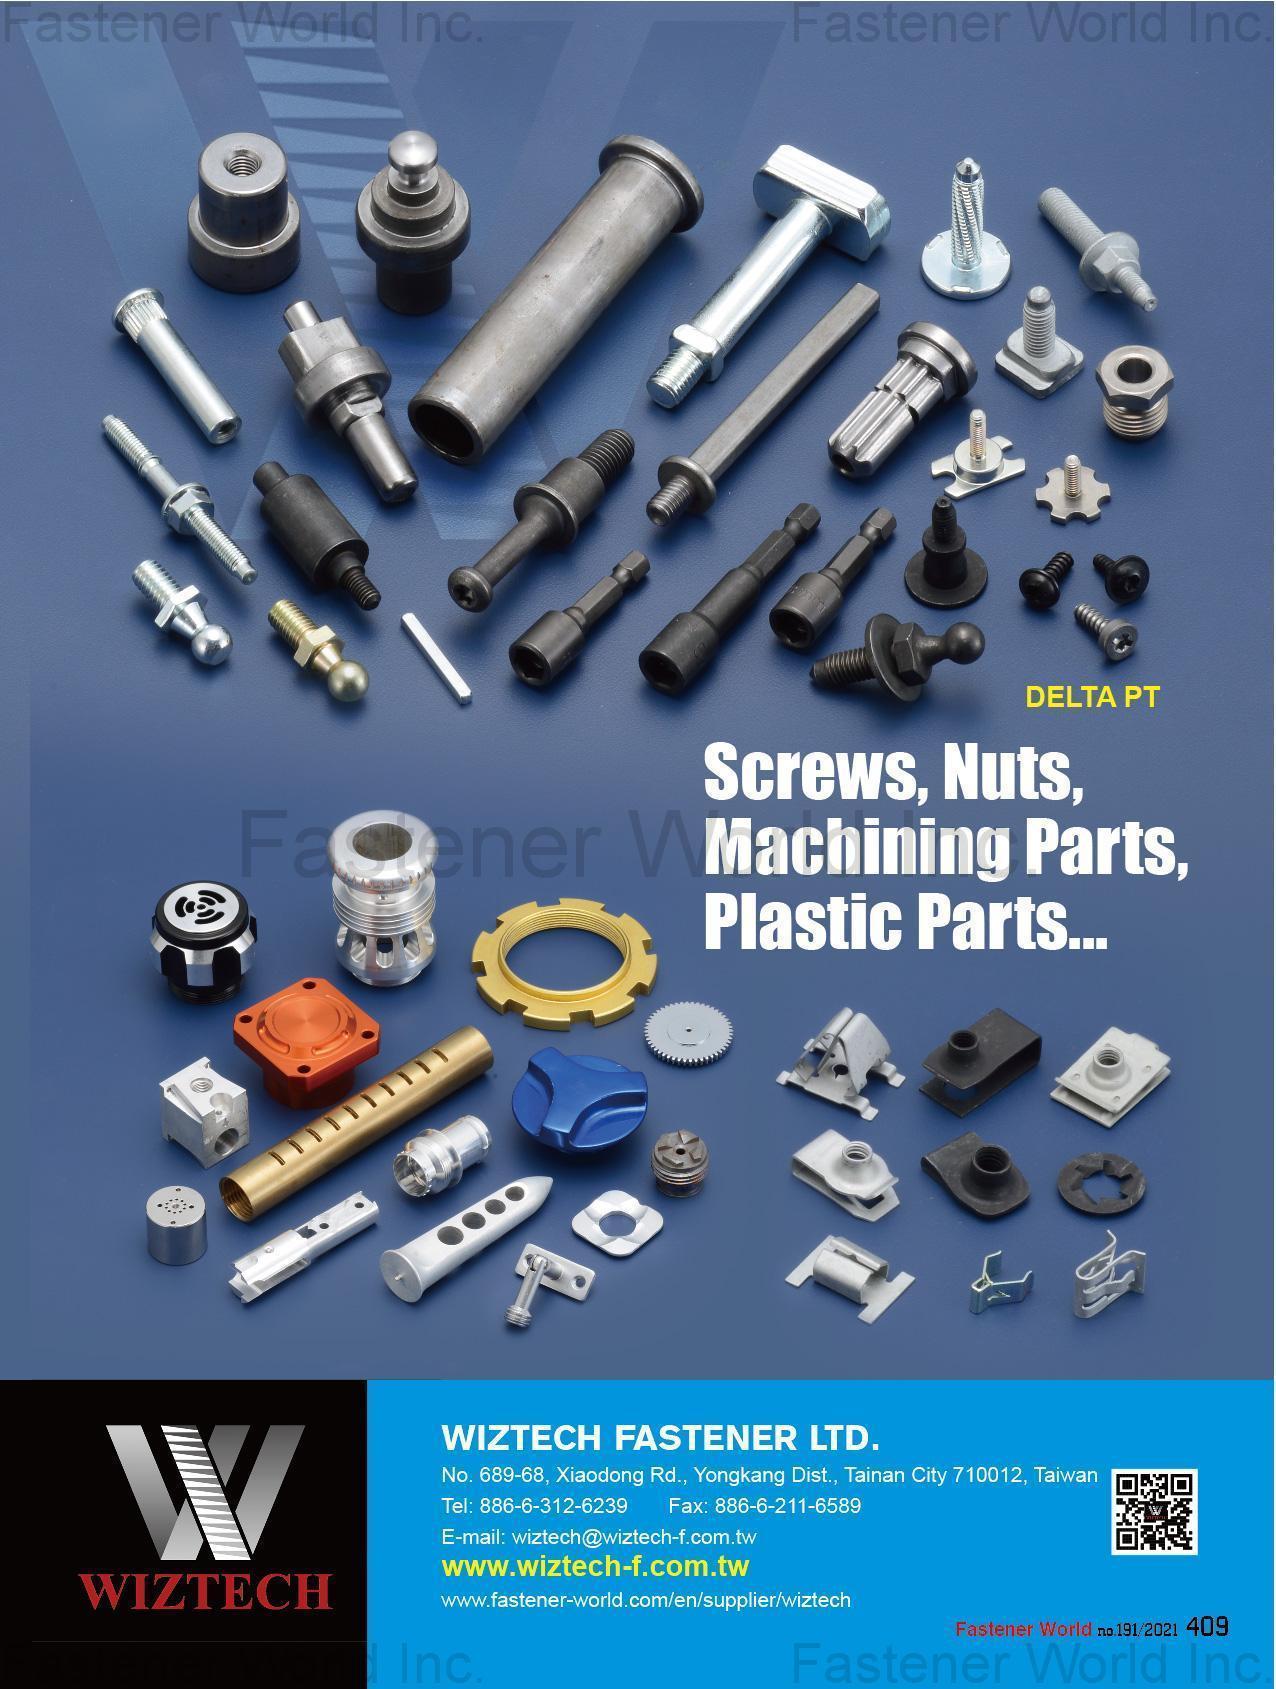 WIZTECH FASTENER LTD. , Screws, Nuts, Machining Parts, Plastic Parts, Delta PT